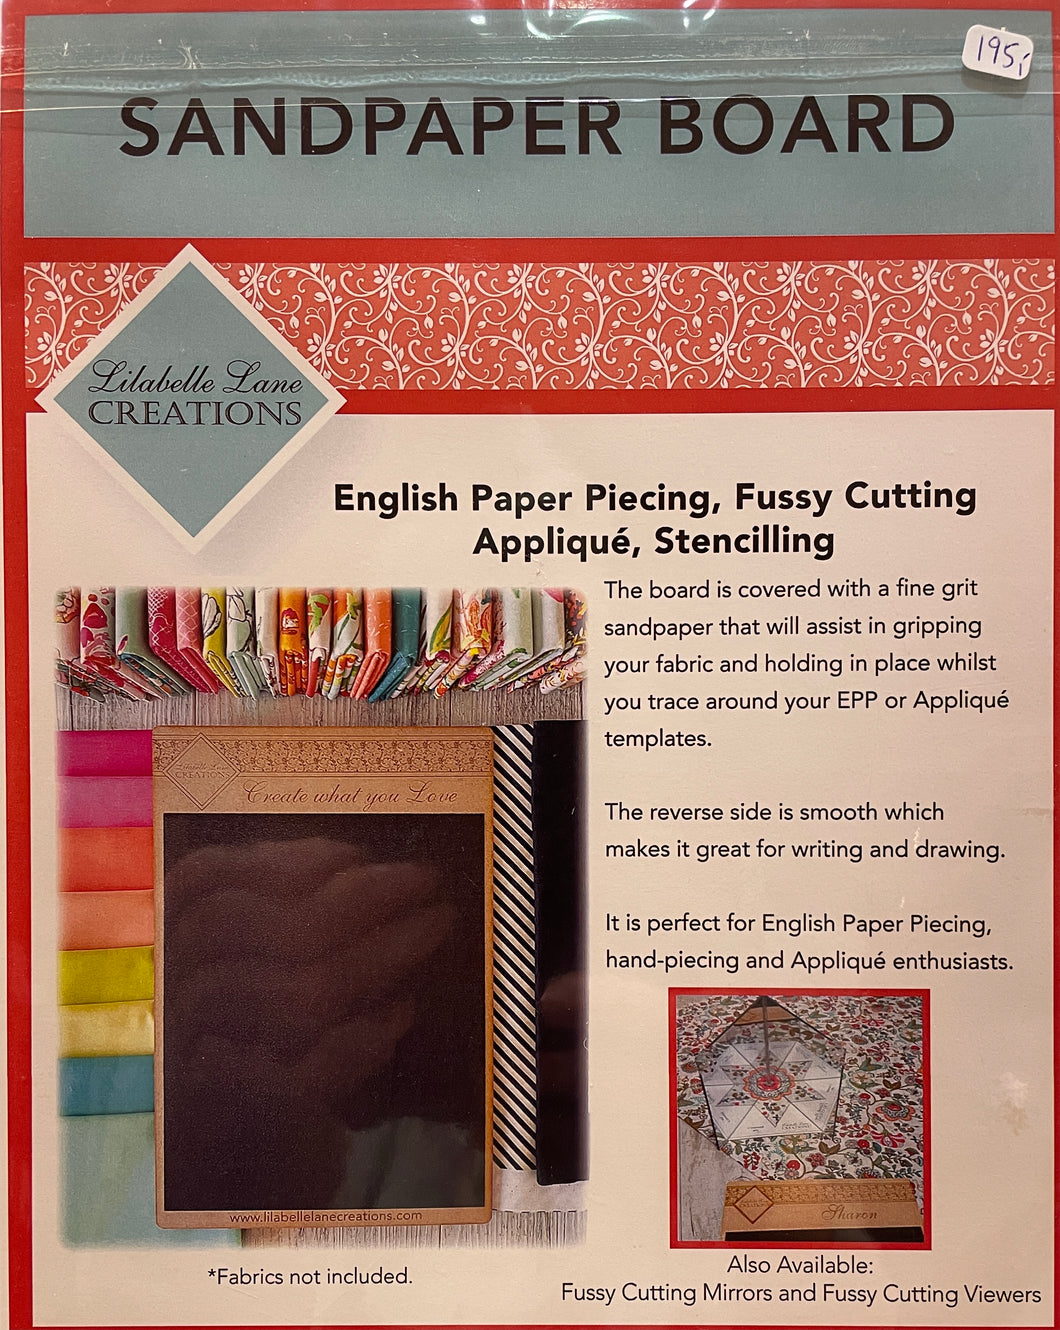 Sandpaper board